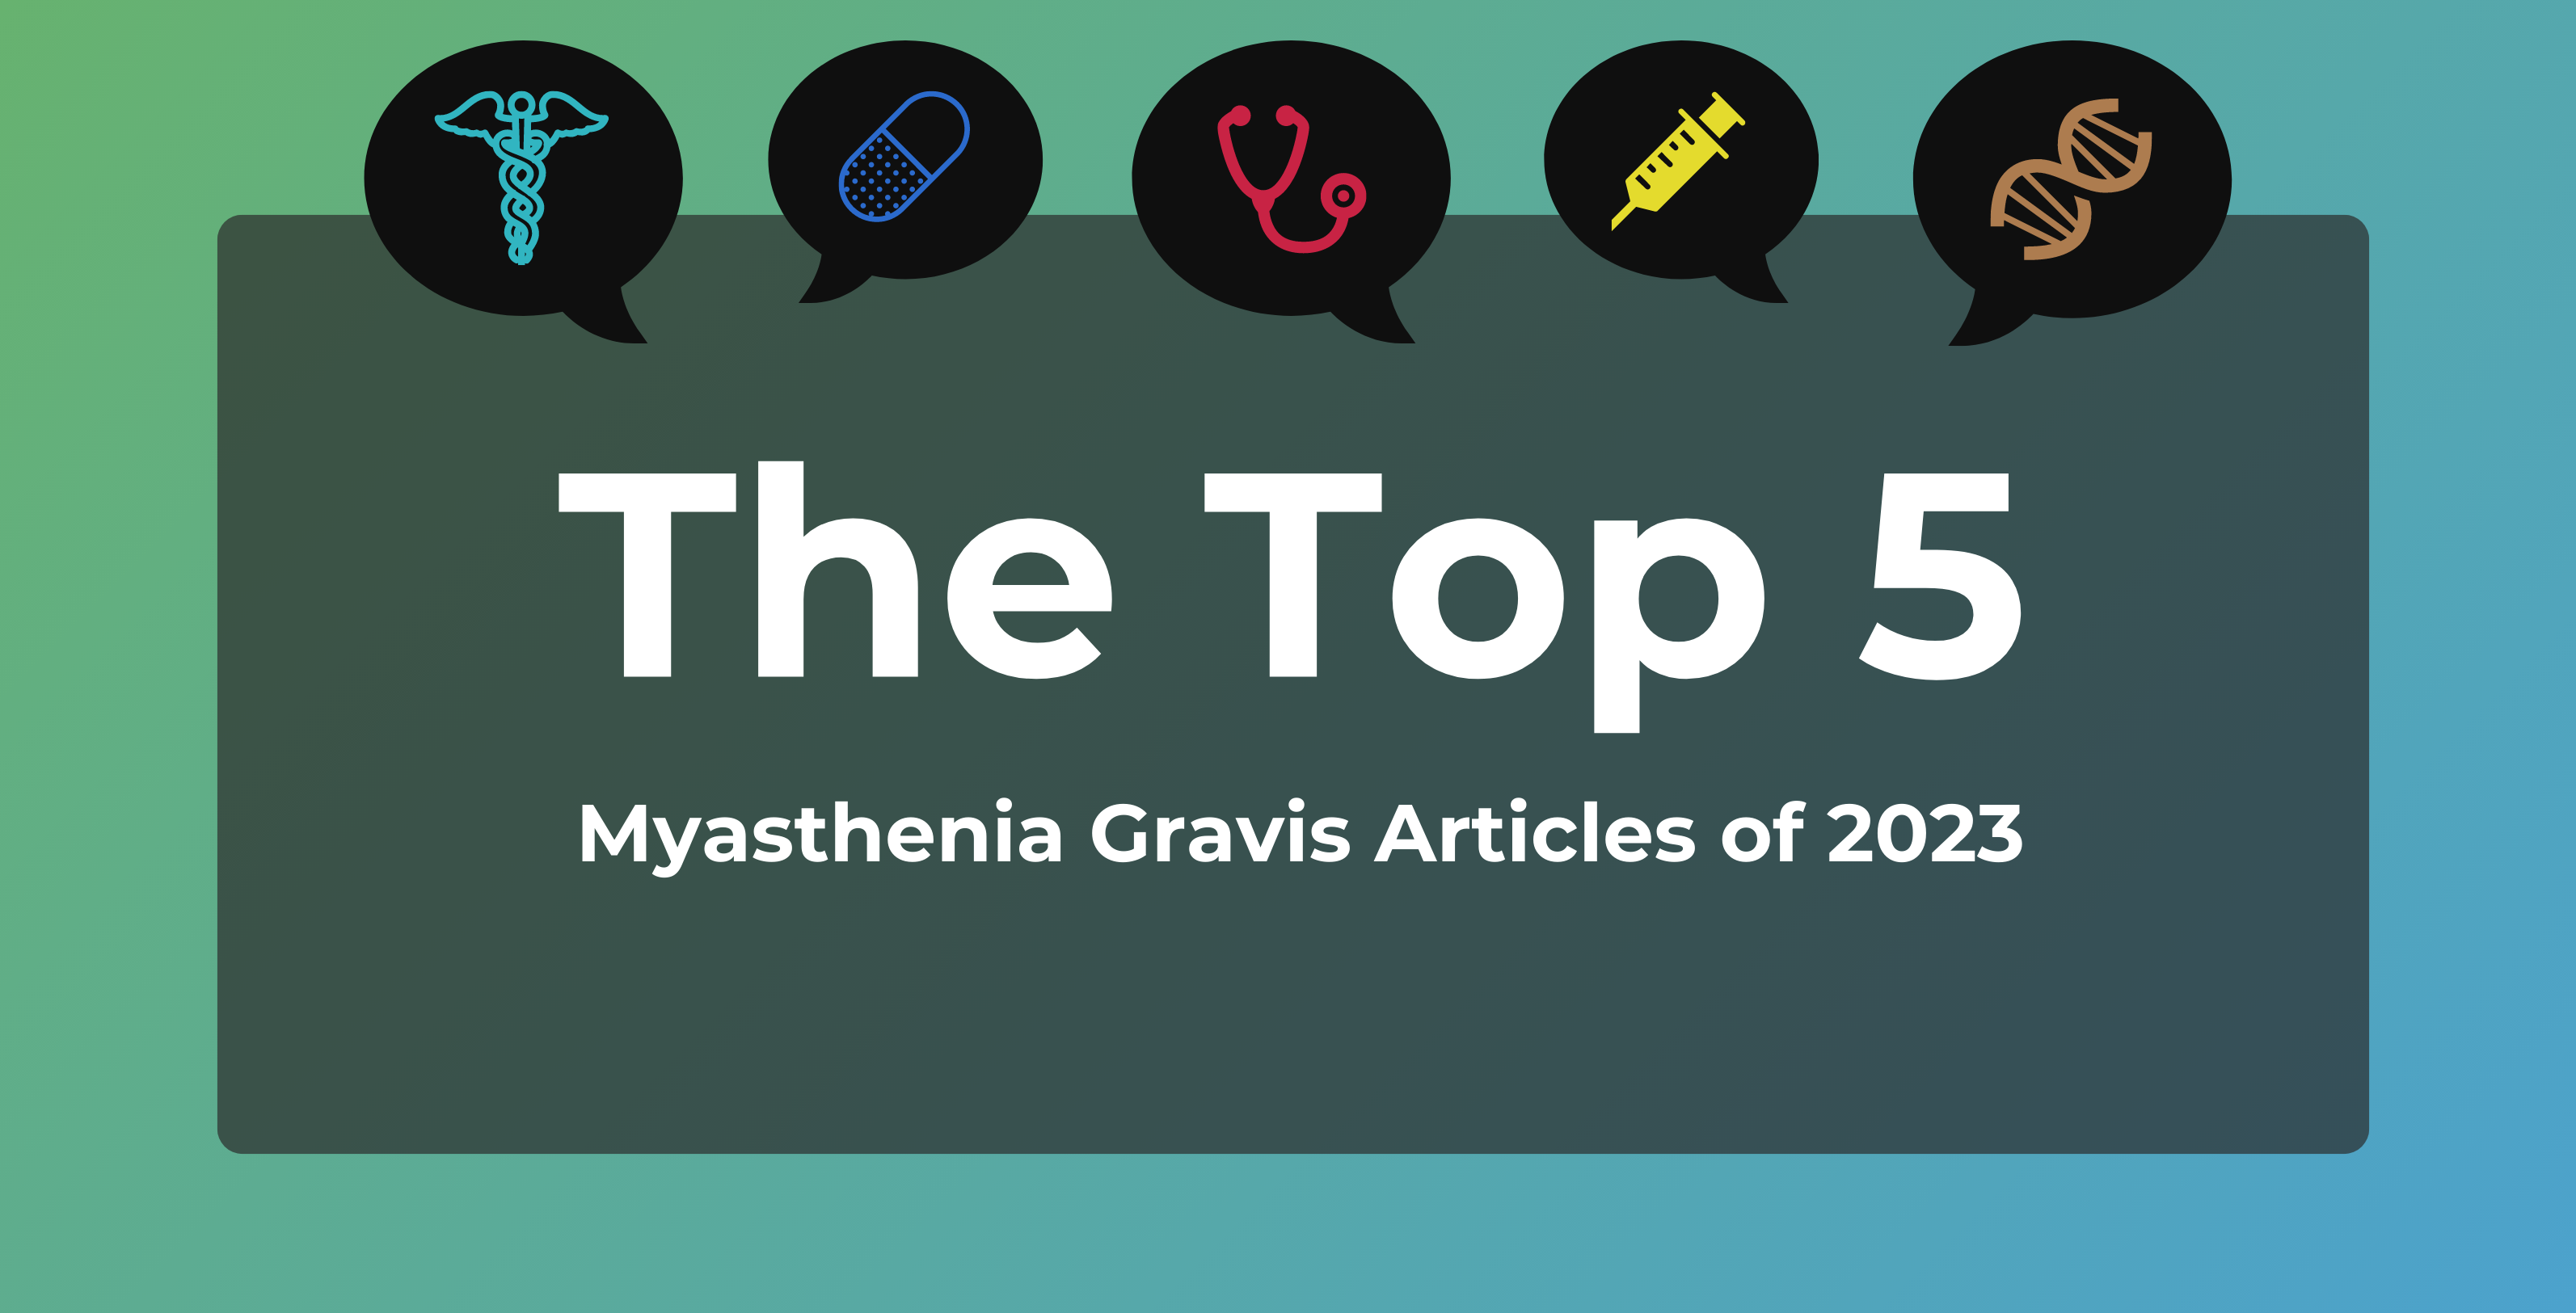 Graphic representing the top 5 myasthenia gravis articles of 2023